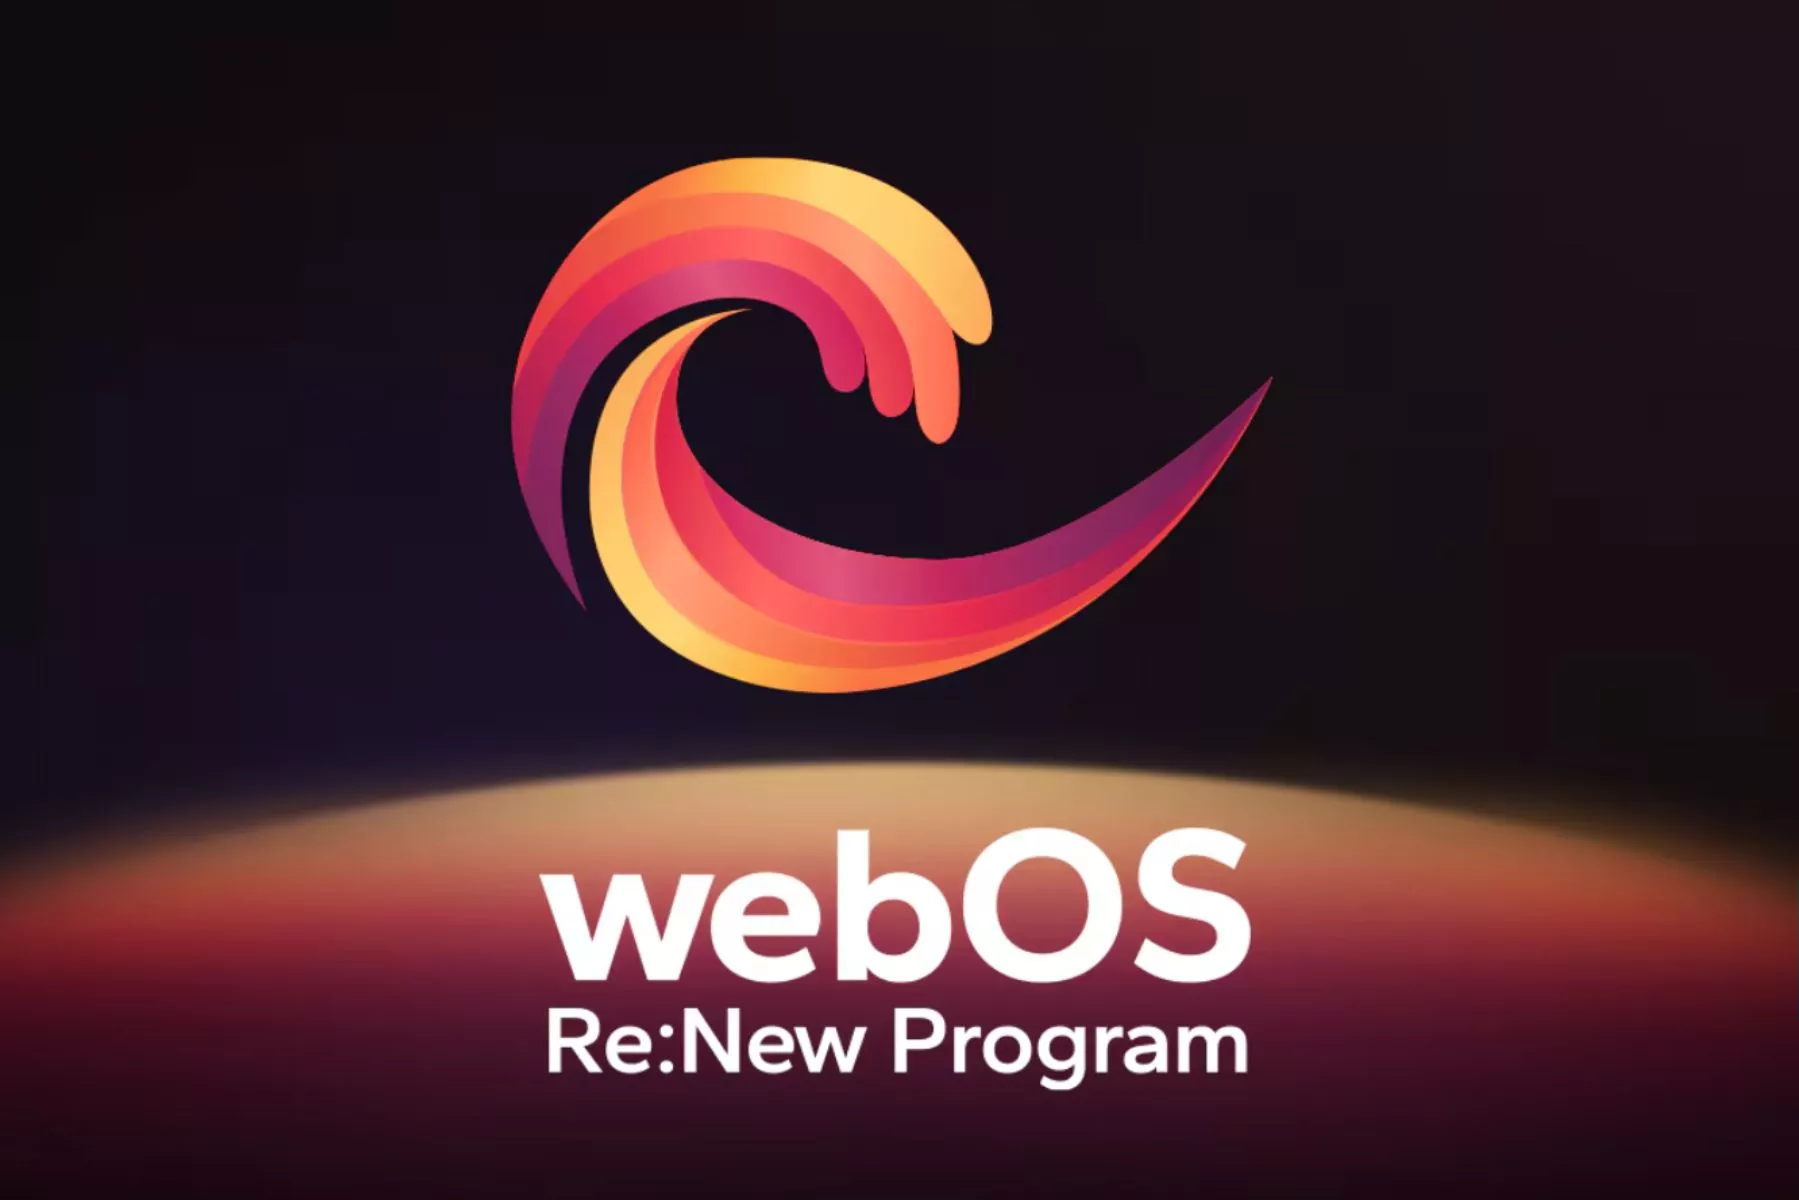 webOS Re:New Program